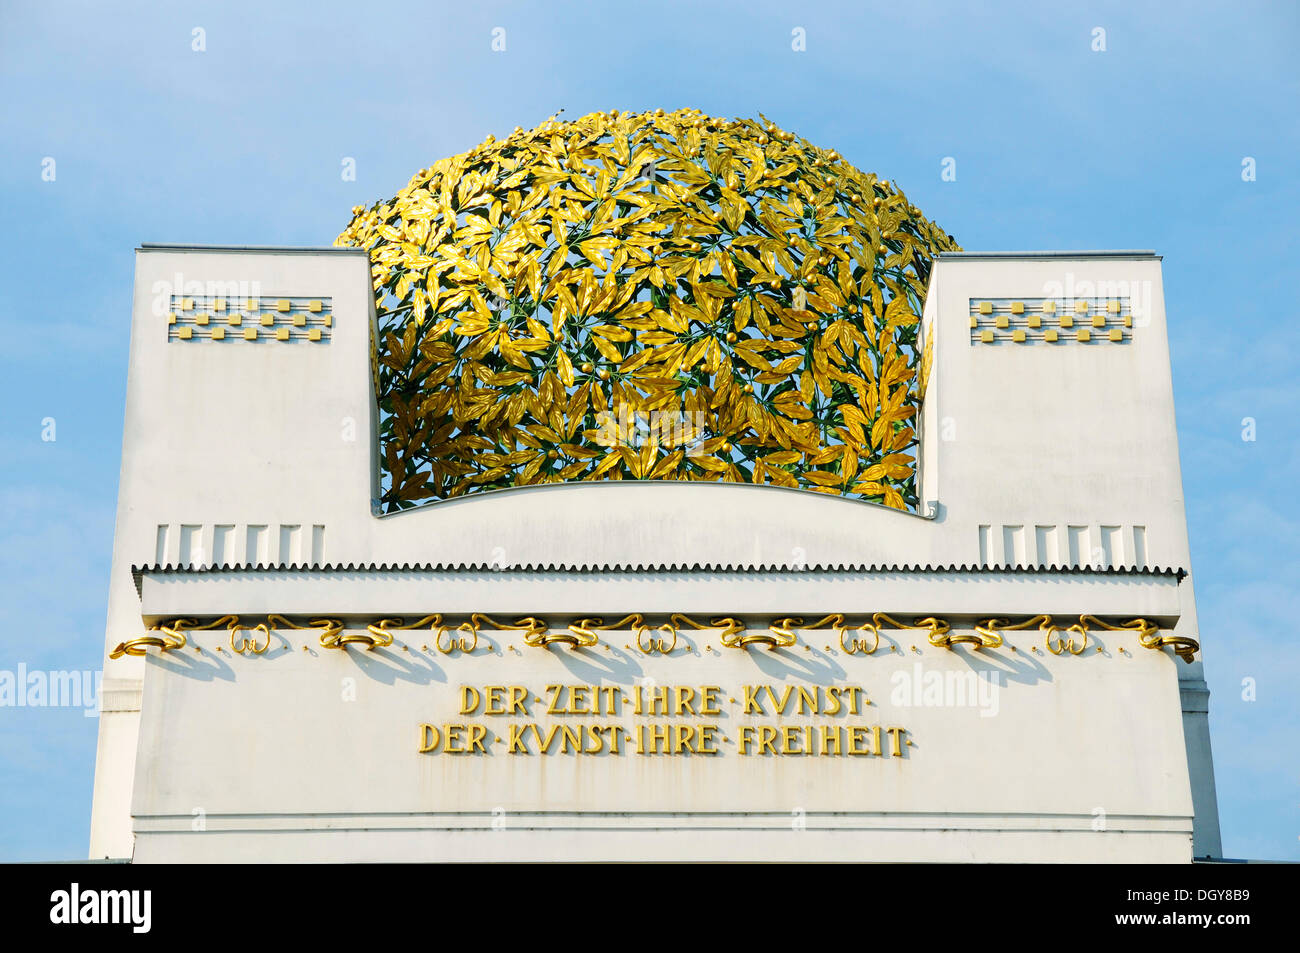 Dome of the Secession with golden leaves, lettering Der Zeit ihre Kunst, Der Kunst ihre Freiheit, German for The age its art Stock Photo